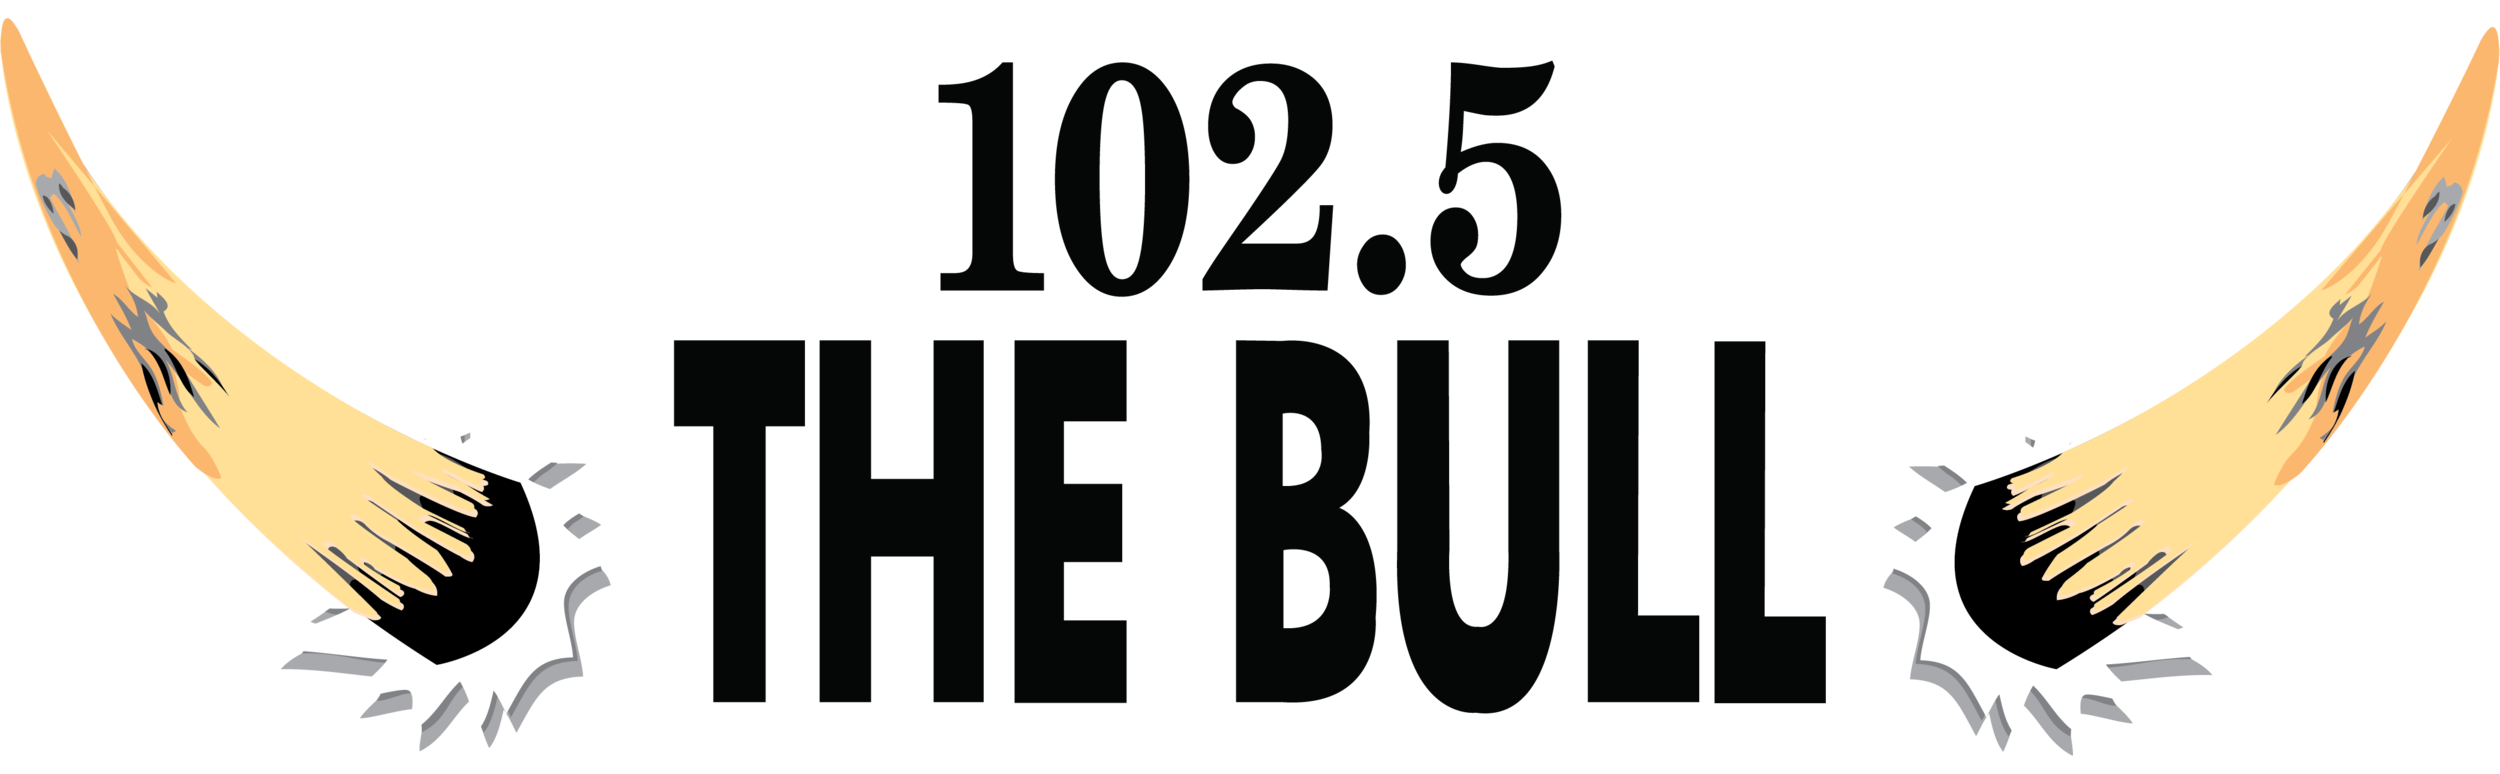 1025-The-Bull-Black.png